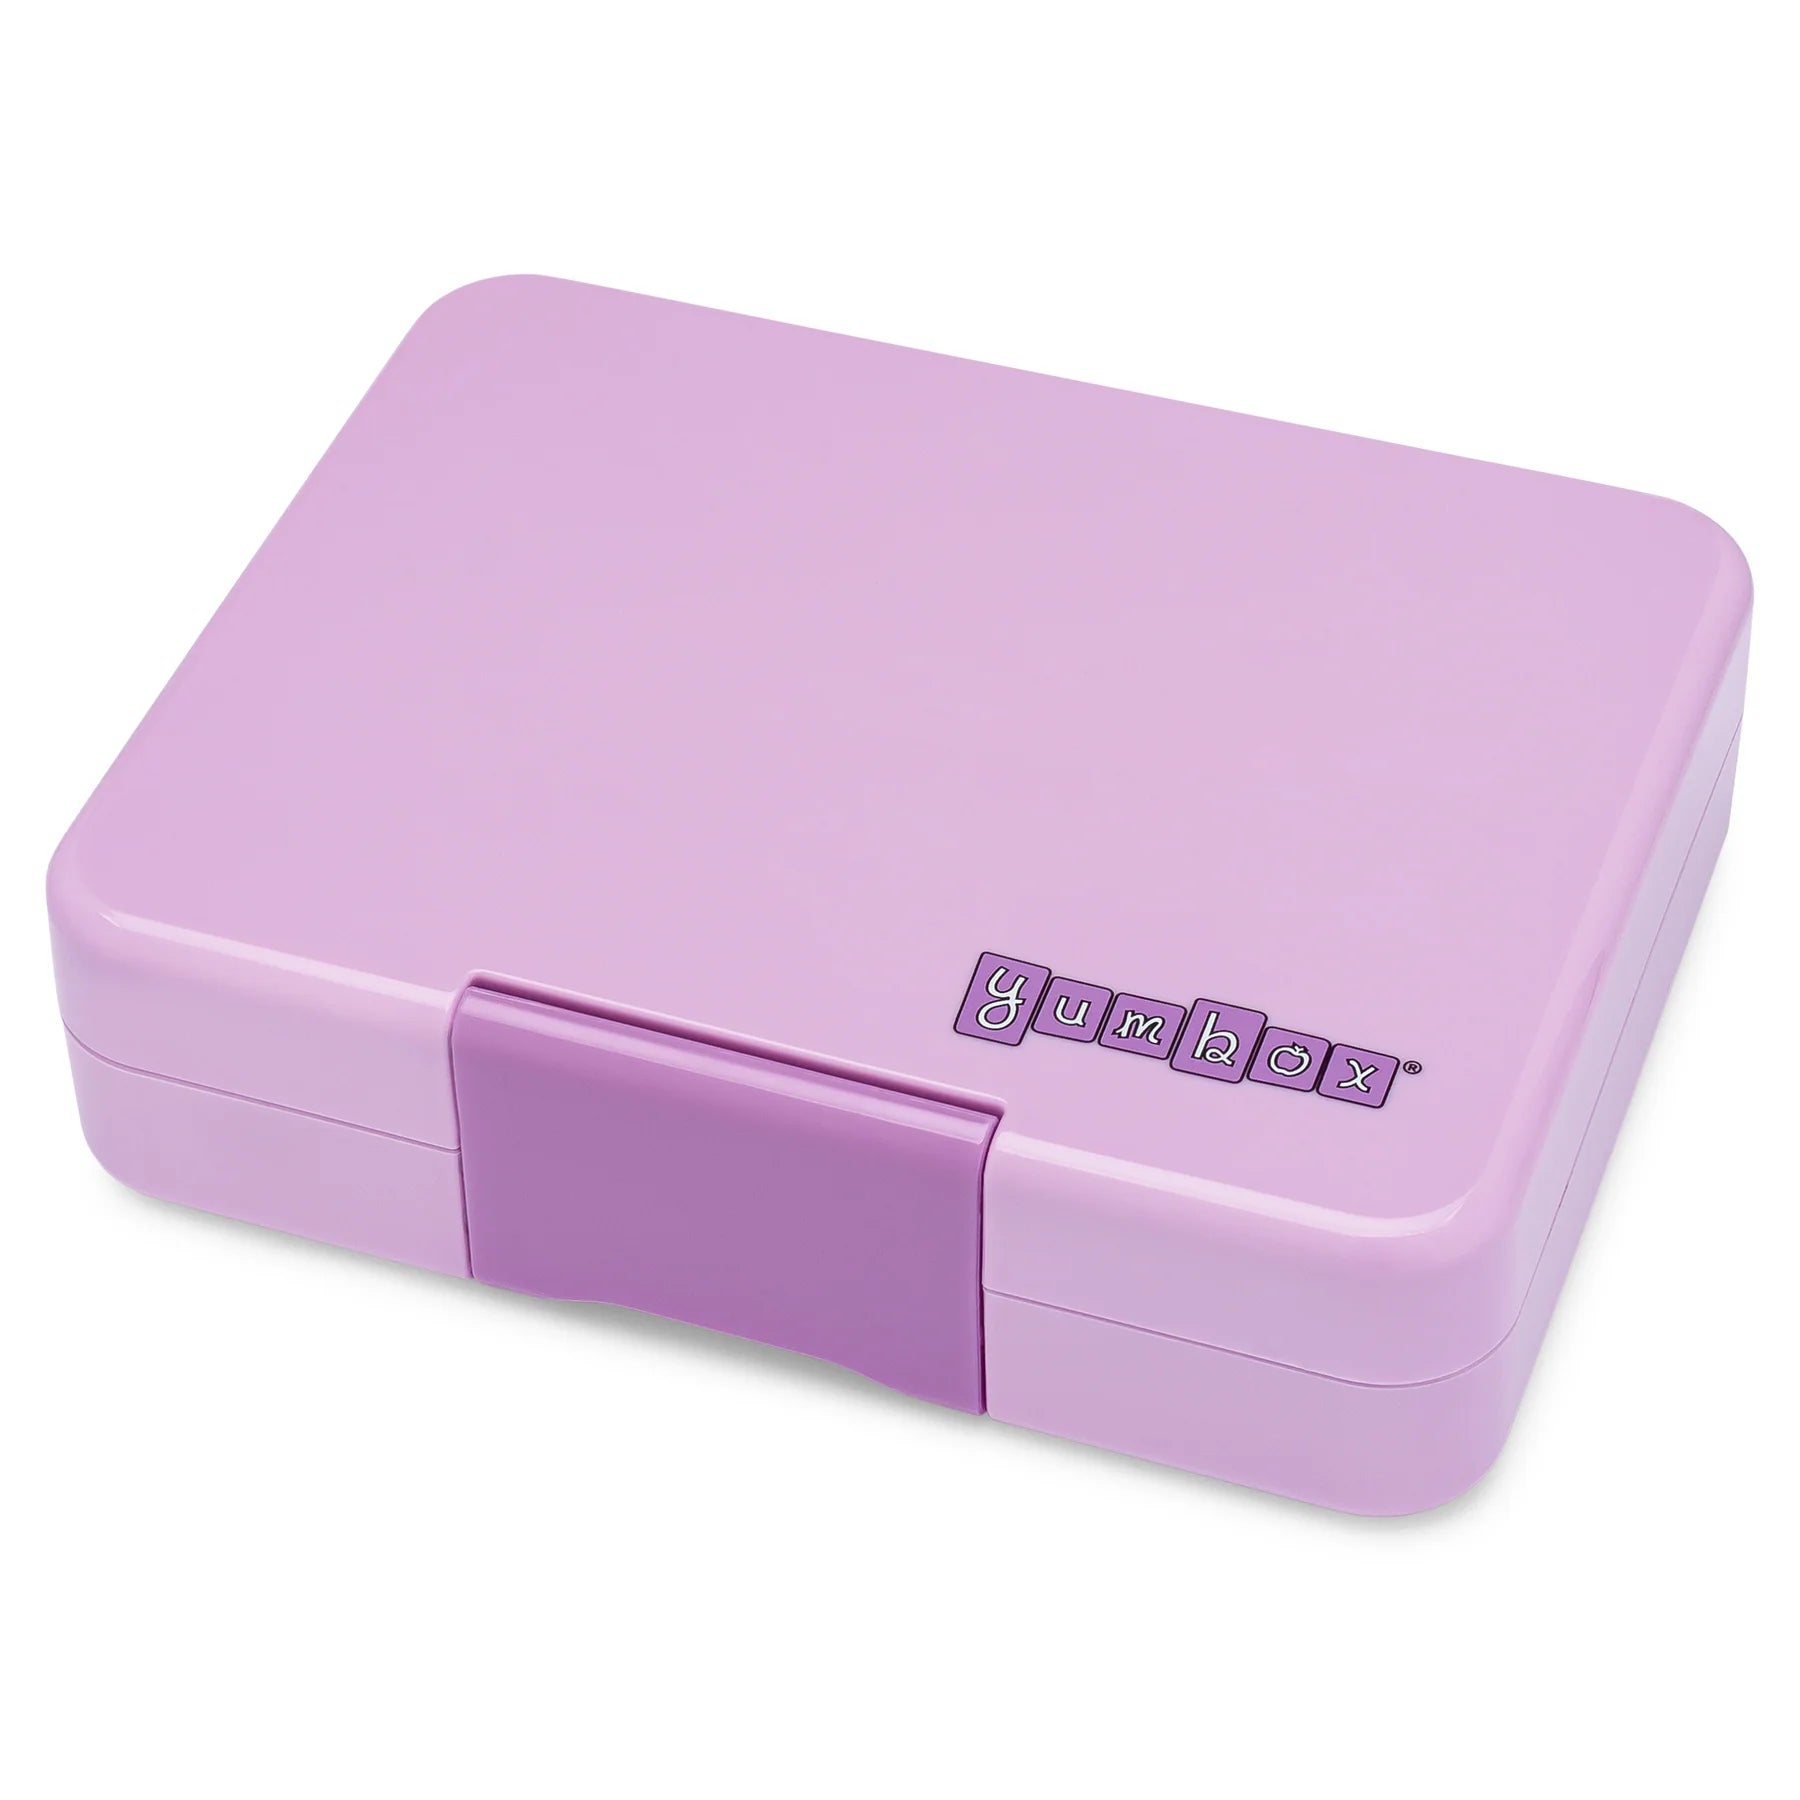 Yumbox Snack 3-Compartment Snack Box - Lulu Purple/Rainbow Tray Closed